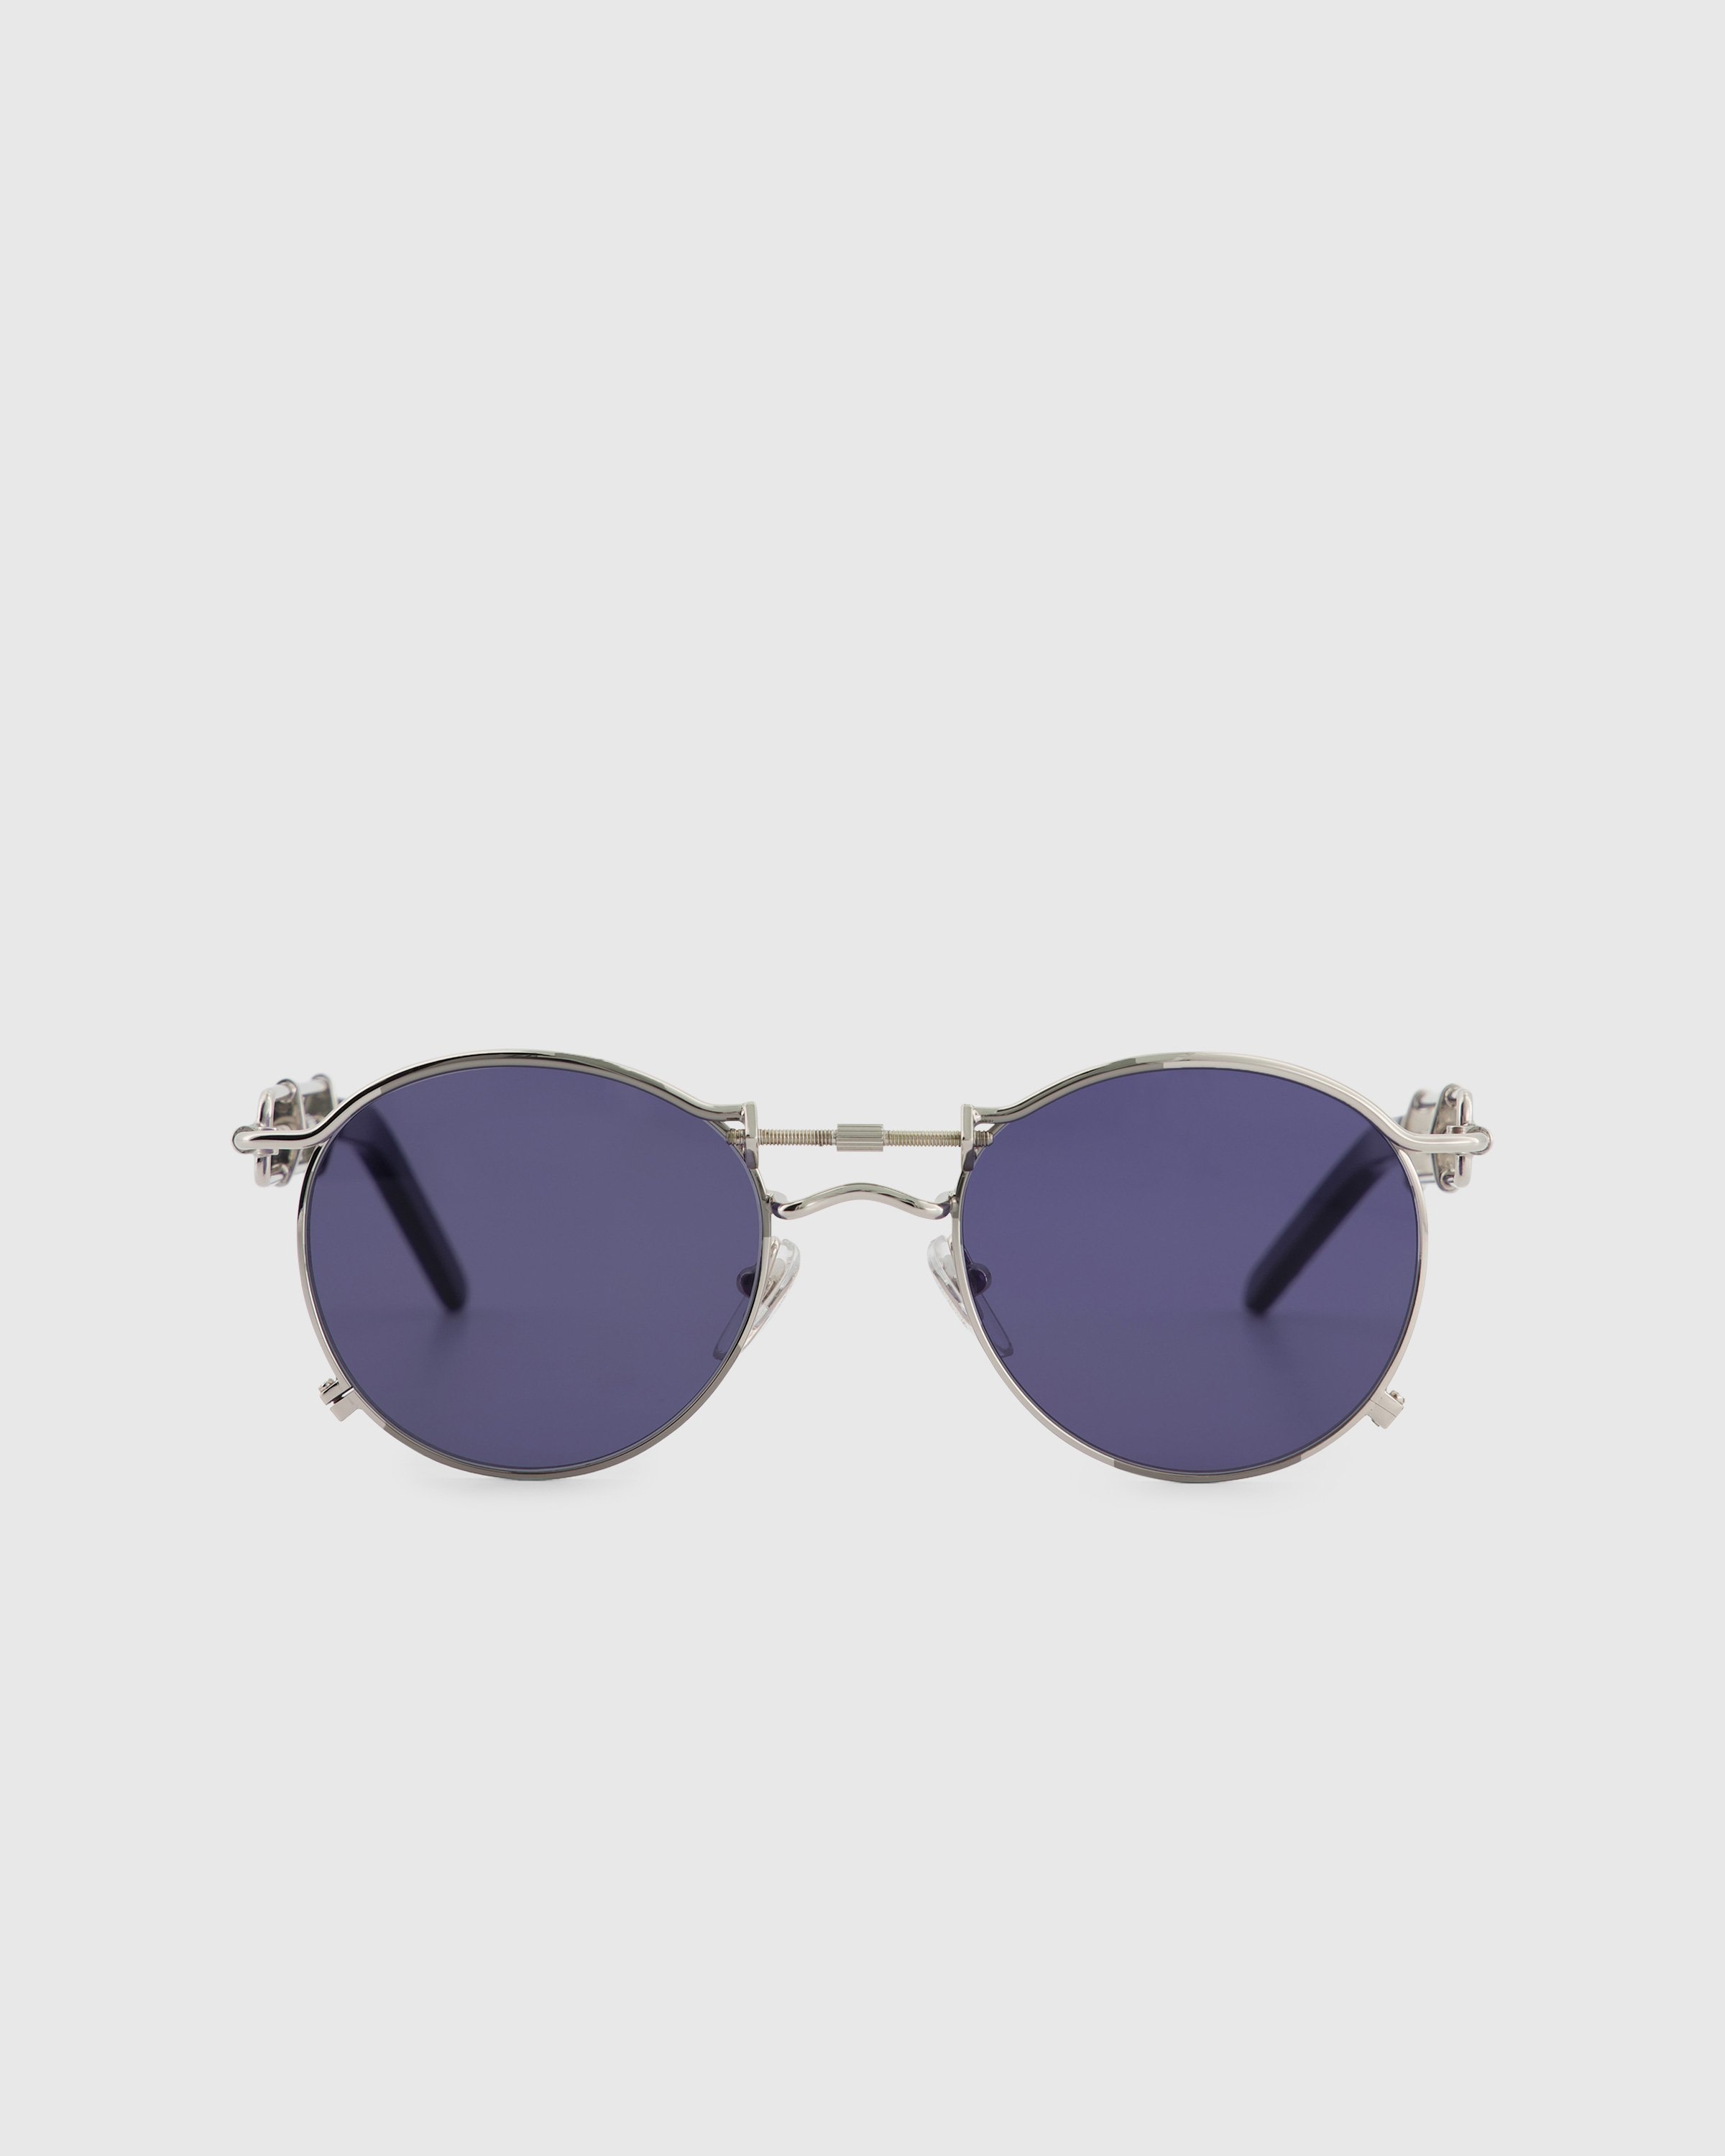 Jean Paul Gaultier x Burna Boy – 56-0174 Pas De Vis Sunglasses Silver - Sunglasses - Silver - Image 1